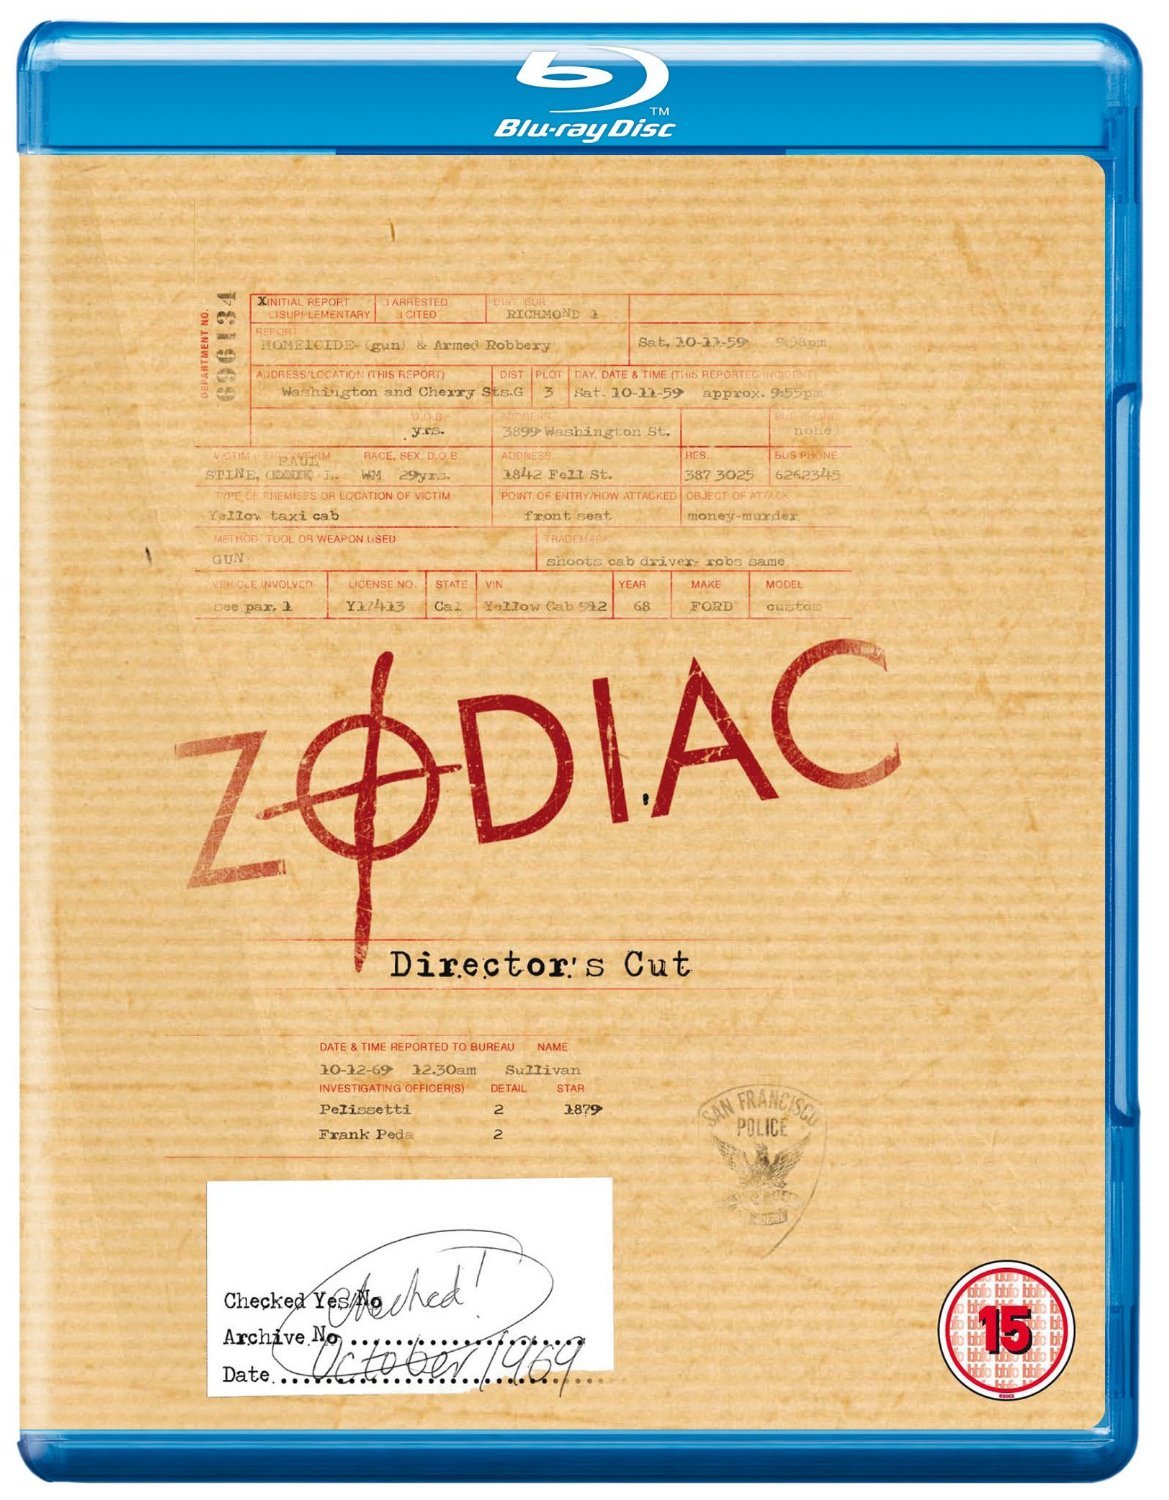 Zodiac (2007) Director's Cut 3237Kbps 23.976Fps 48Khz BluRay DTS-HD MA 5.1Ch Turkish Audio TAC